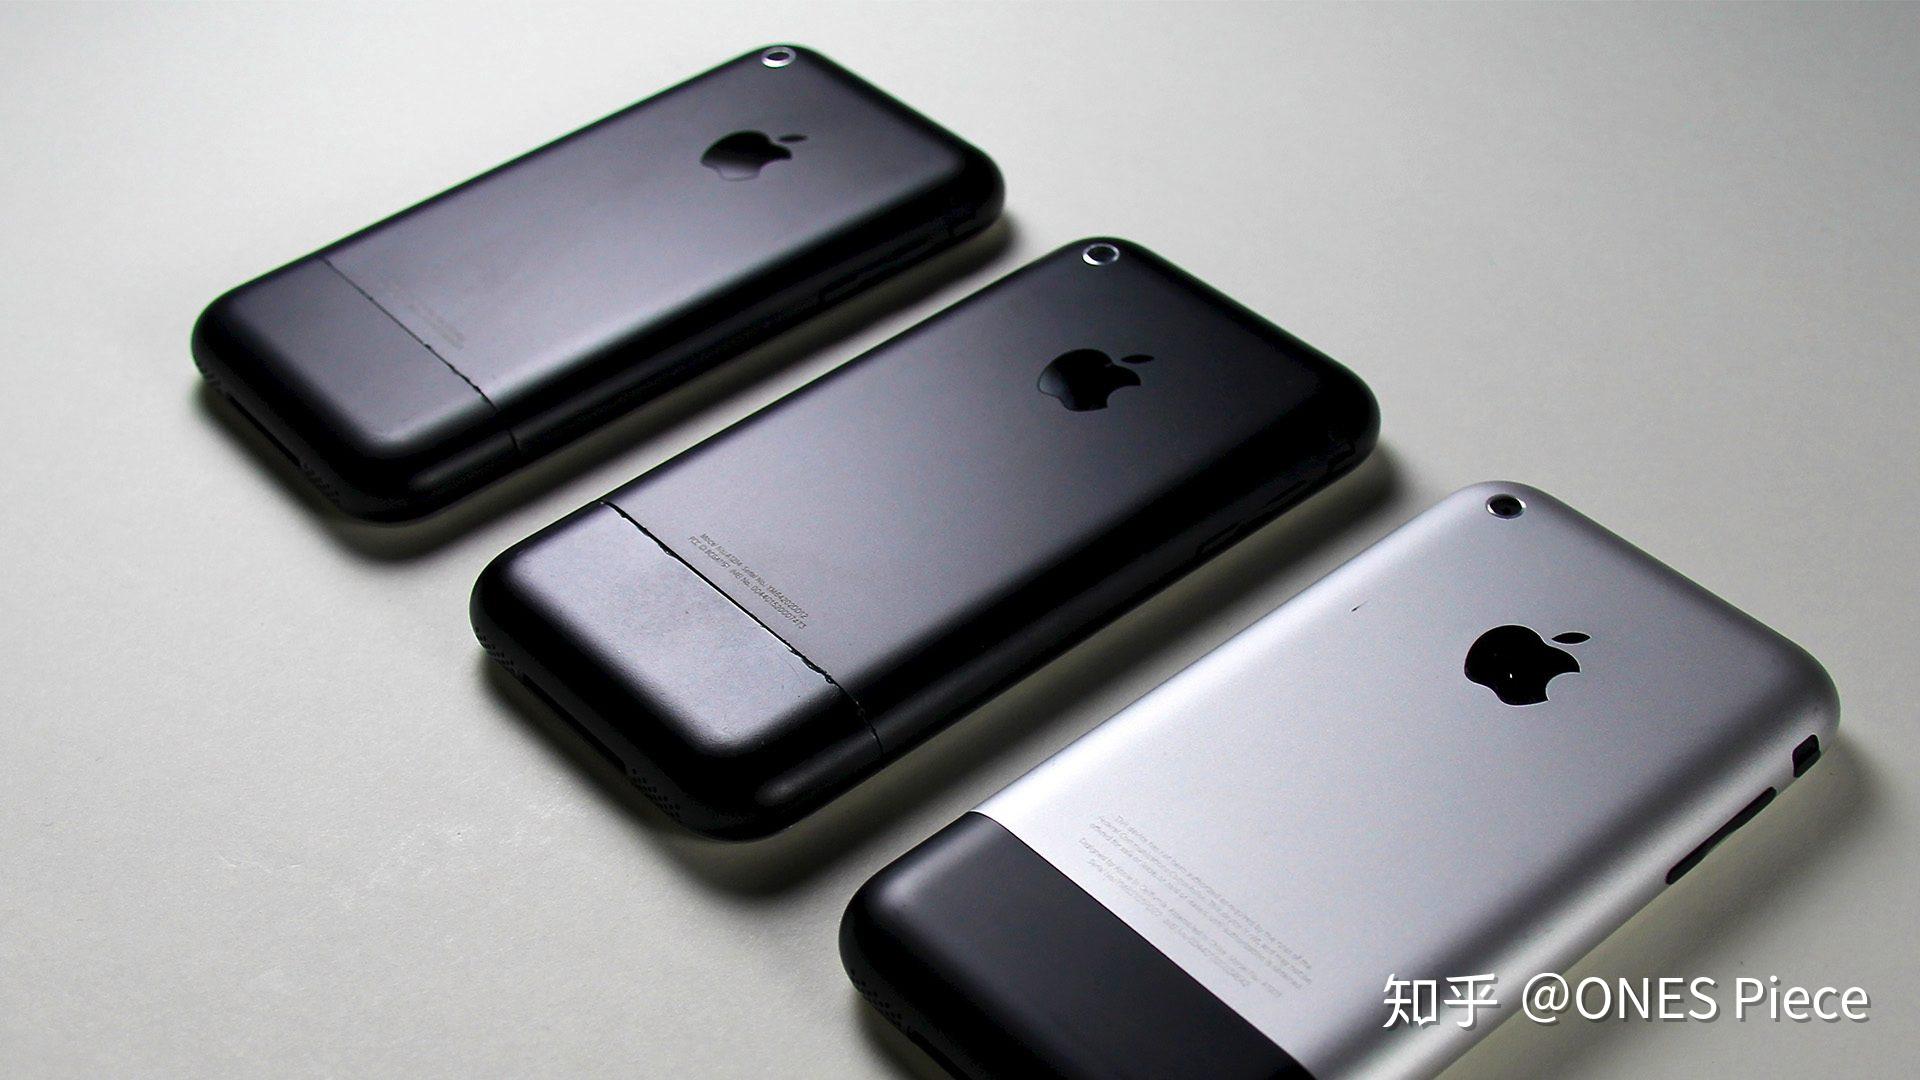 iPhone 6 深空灰色 16G 全网官换 - 二手iPhone 6 - 爱否商城(www.aifou.cn)